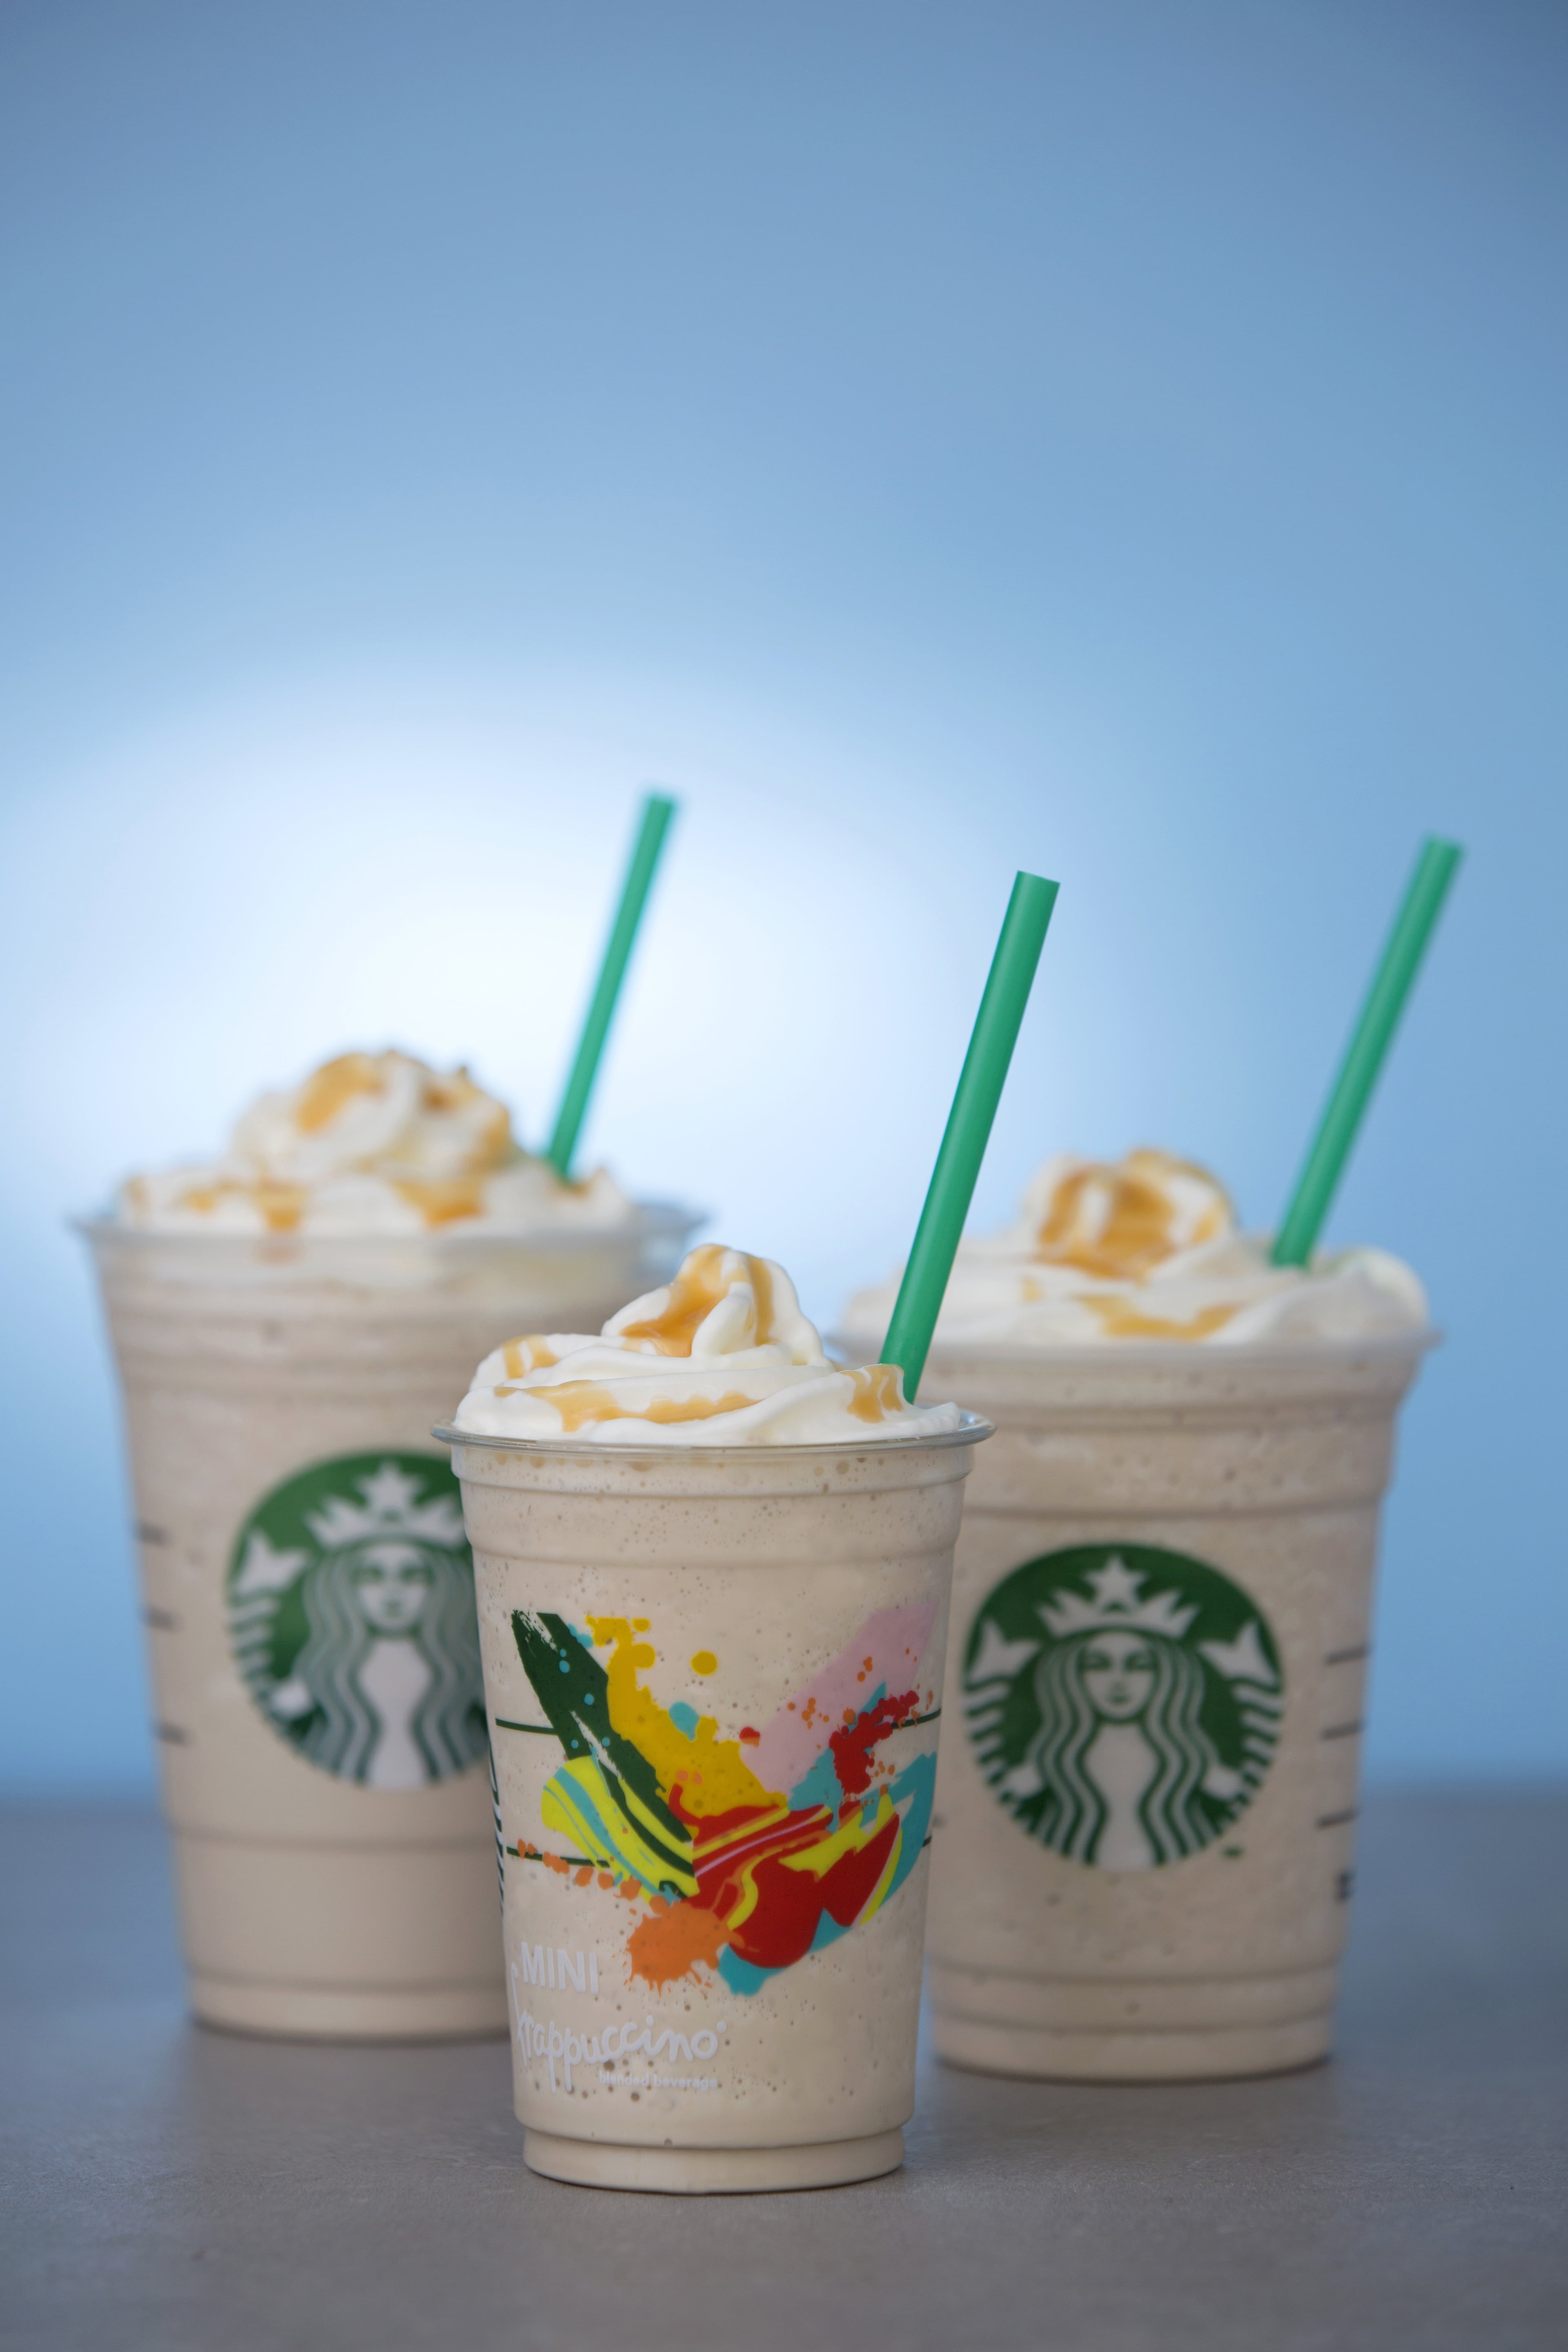 Starbucks' New 'Mini' Frappucino Cuts Calories but Not Profits - TheStreet